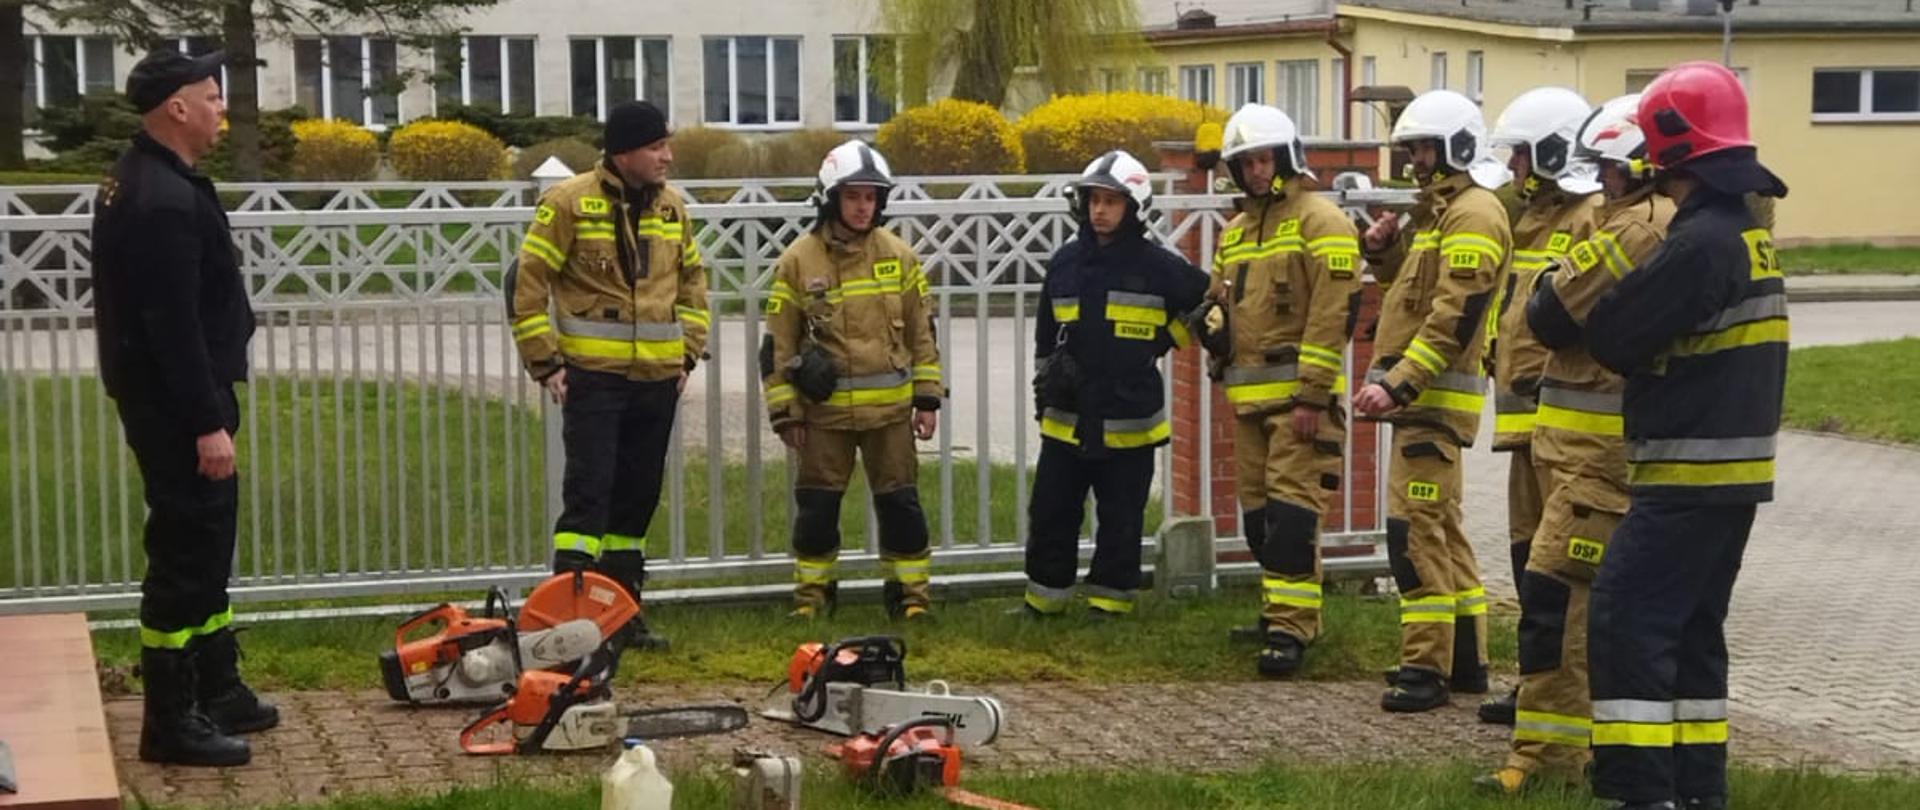 Strażacy OSP podczas szkolenia z pilarek na terenie JRG Kamięń Pomorski